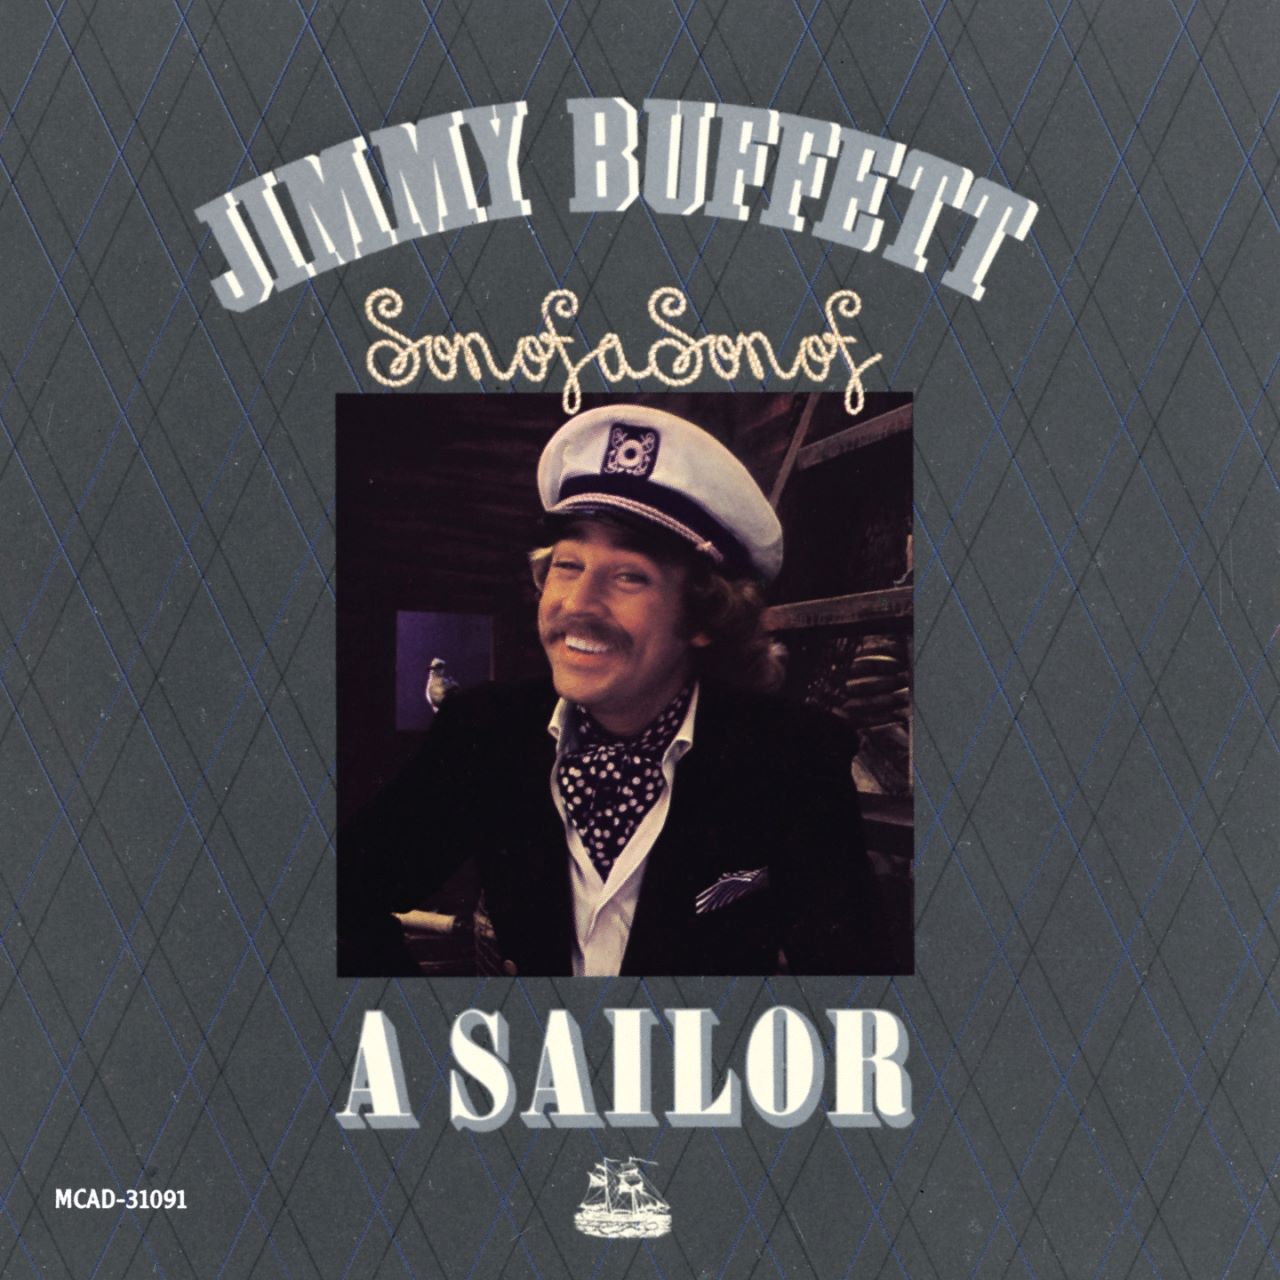 Jimmy Buffett - Son Of A Son Of A Sailor cover album